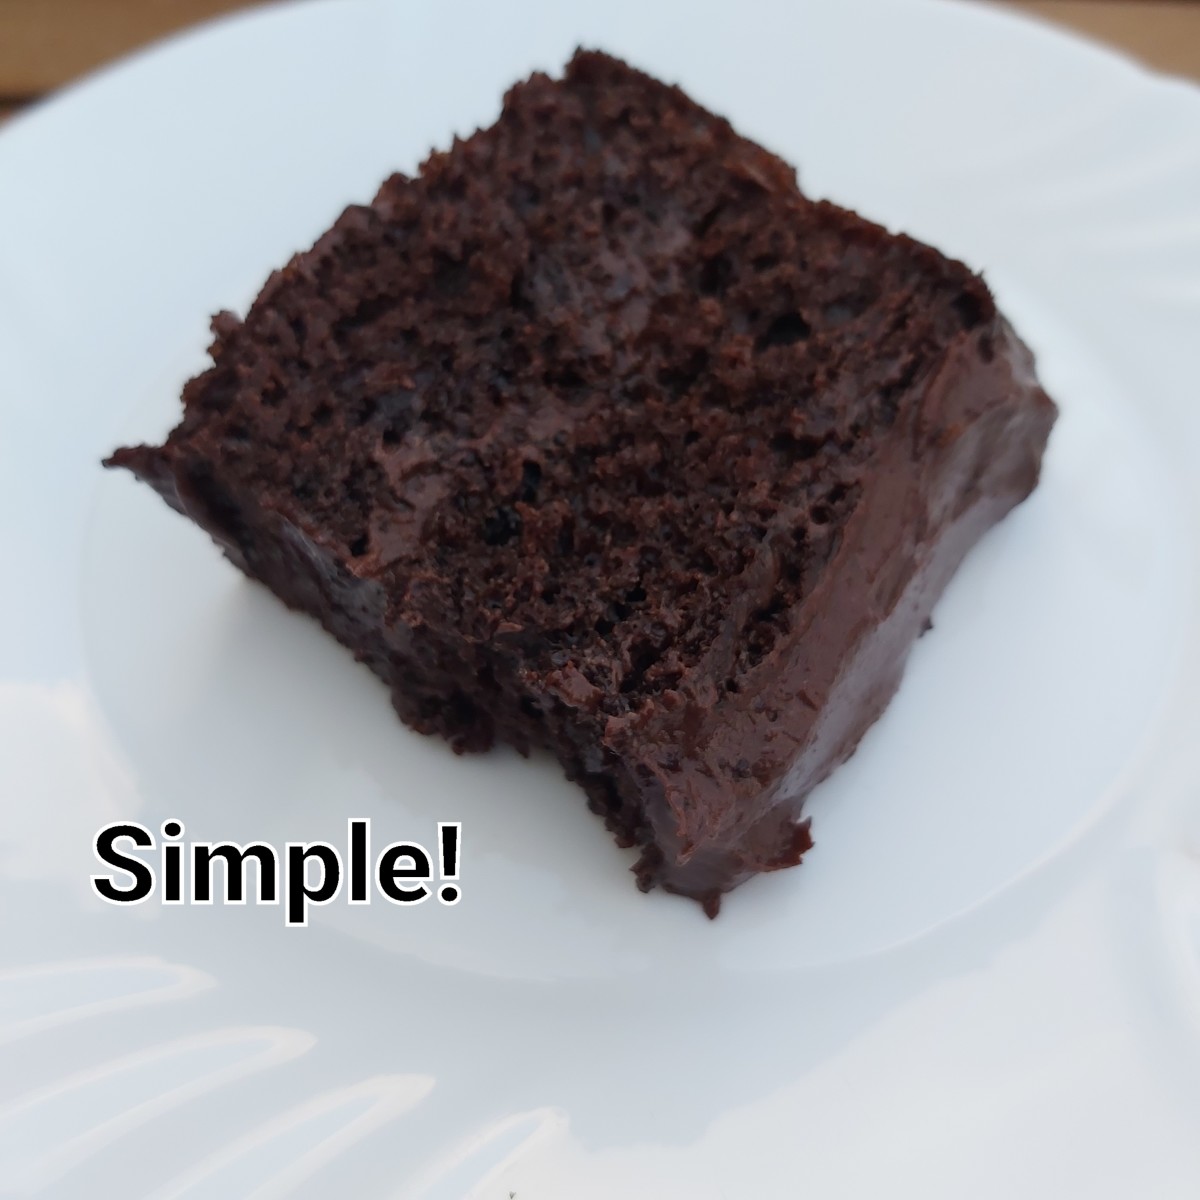 A Simple Slice of Chocolate Cake